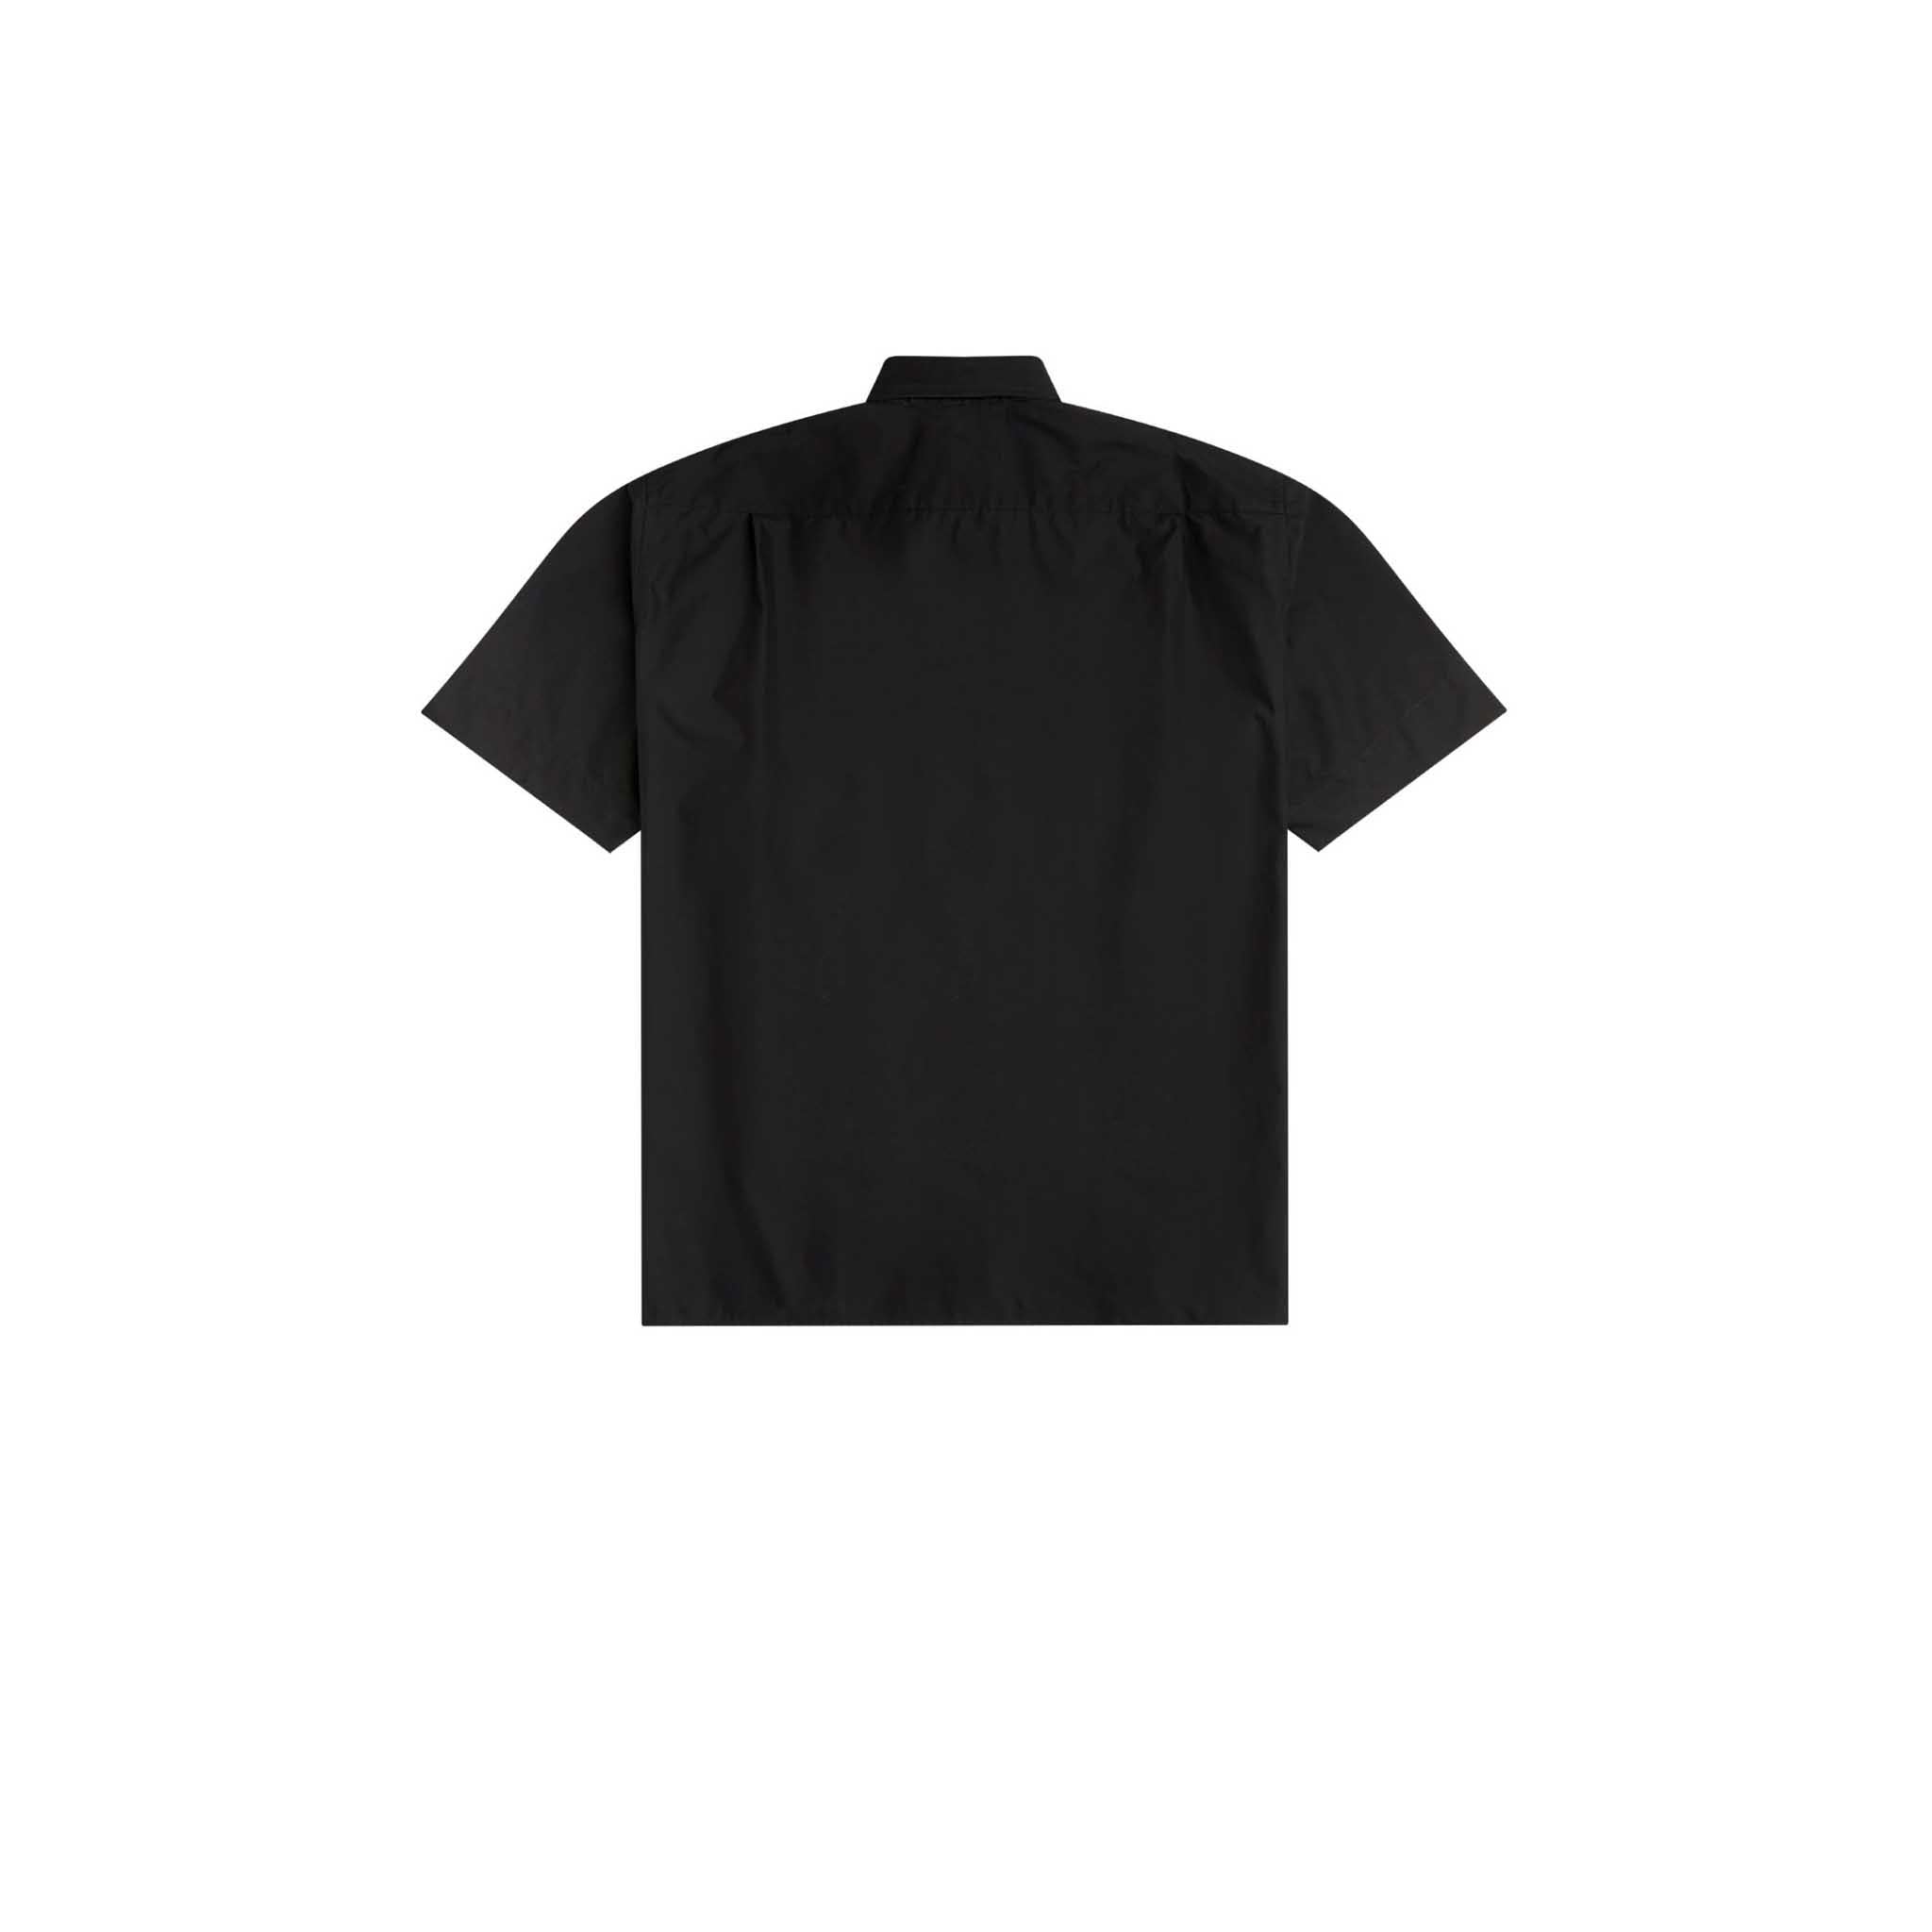 Fred Perry x Raf Simons Short Sleeve Checkerboard Shirt Black